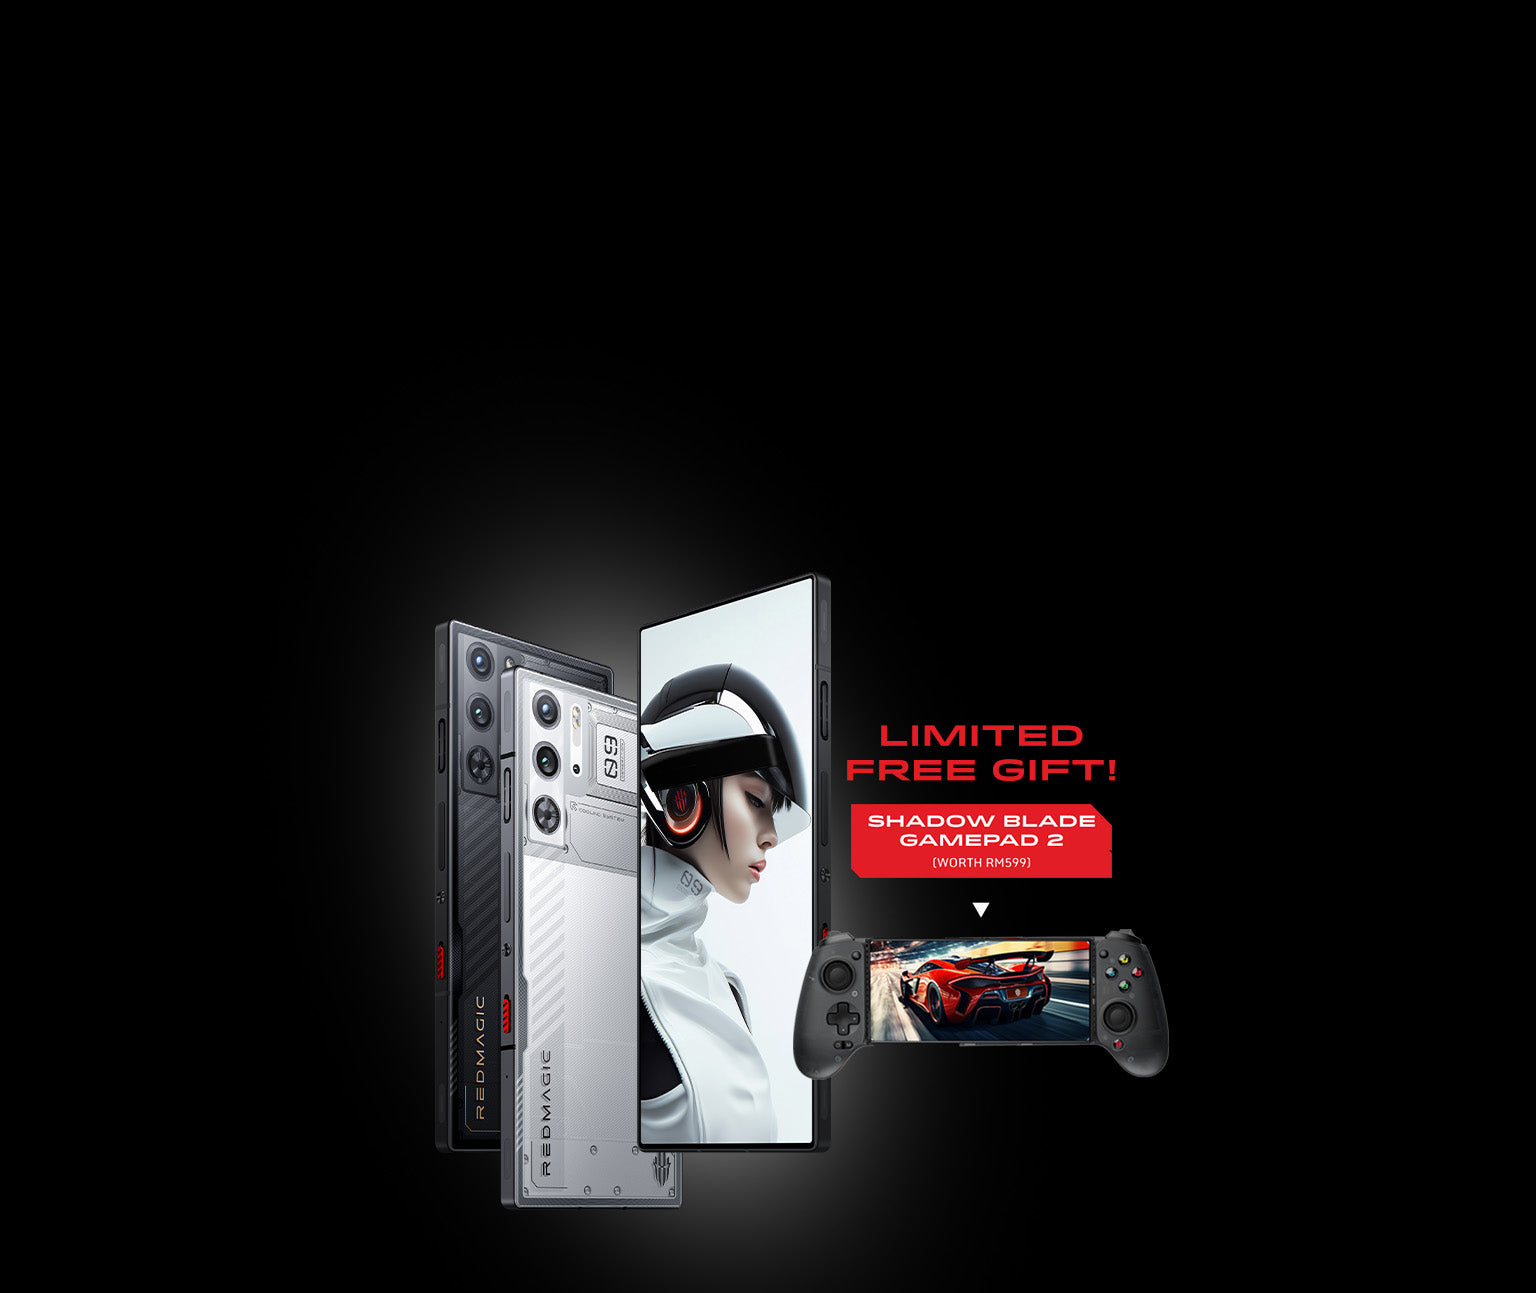 RedMagic 9 Pro Malaysia: Fully flat Snapdragon 8 Gen 3 gaming smartphone,  priced under RM3,000 - SoyaCincau